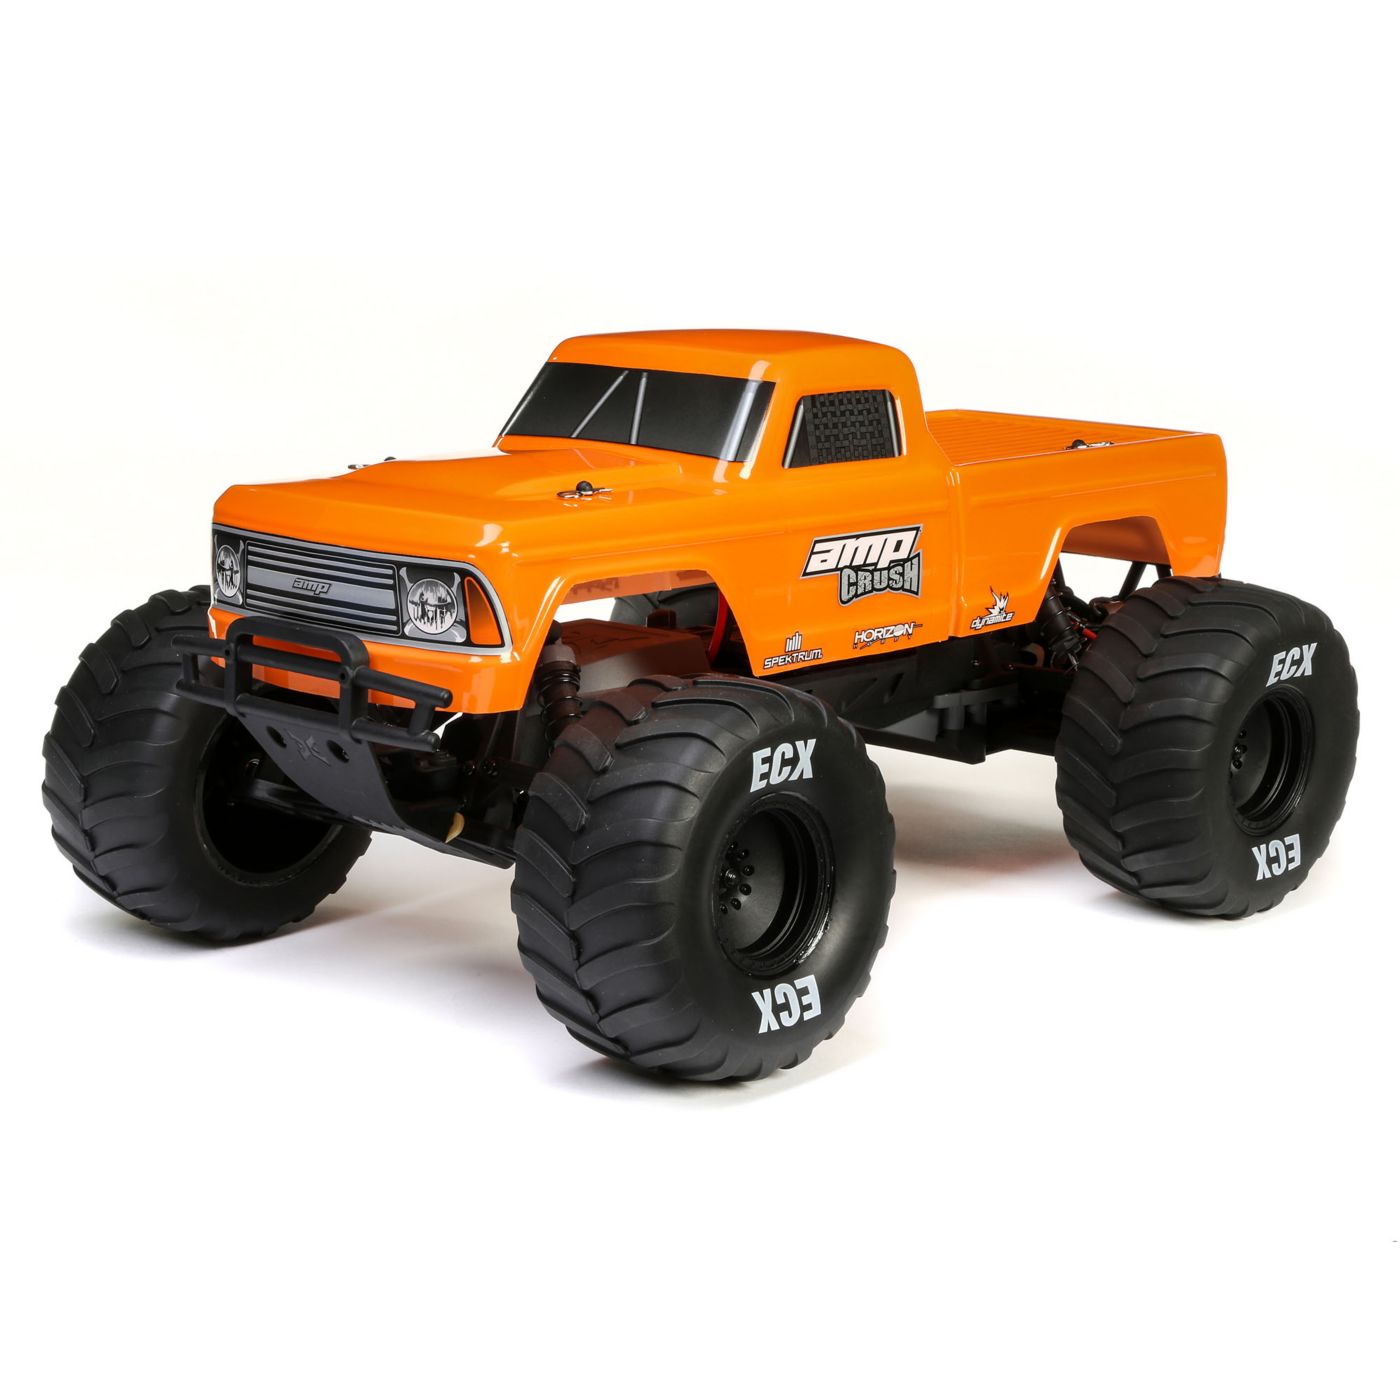 ECX Amp Crush 2WD Monster Truck - Orange